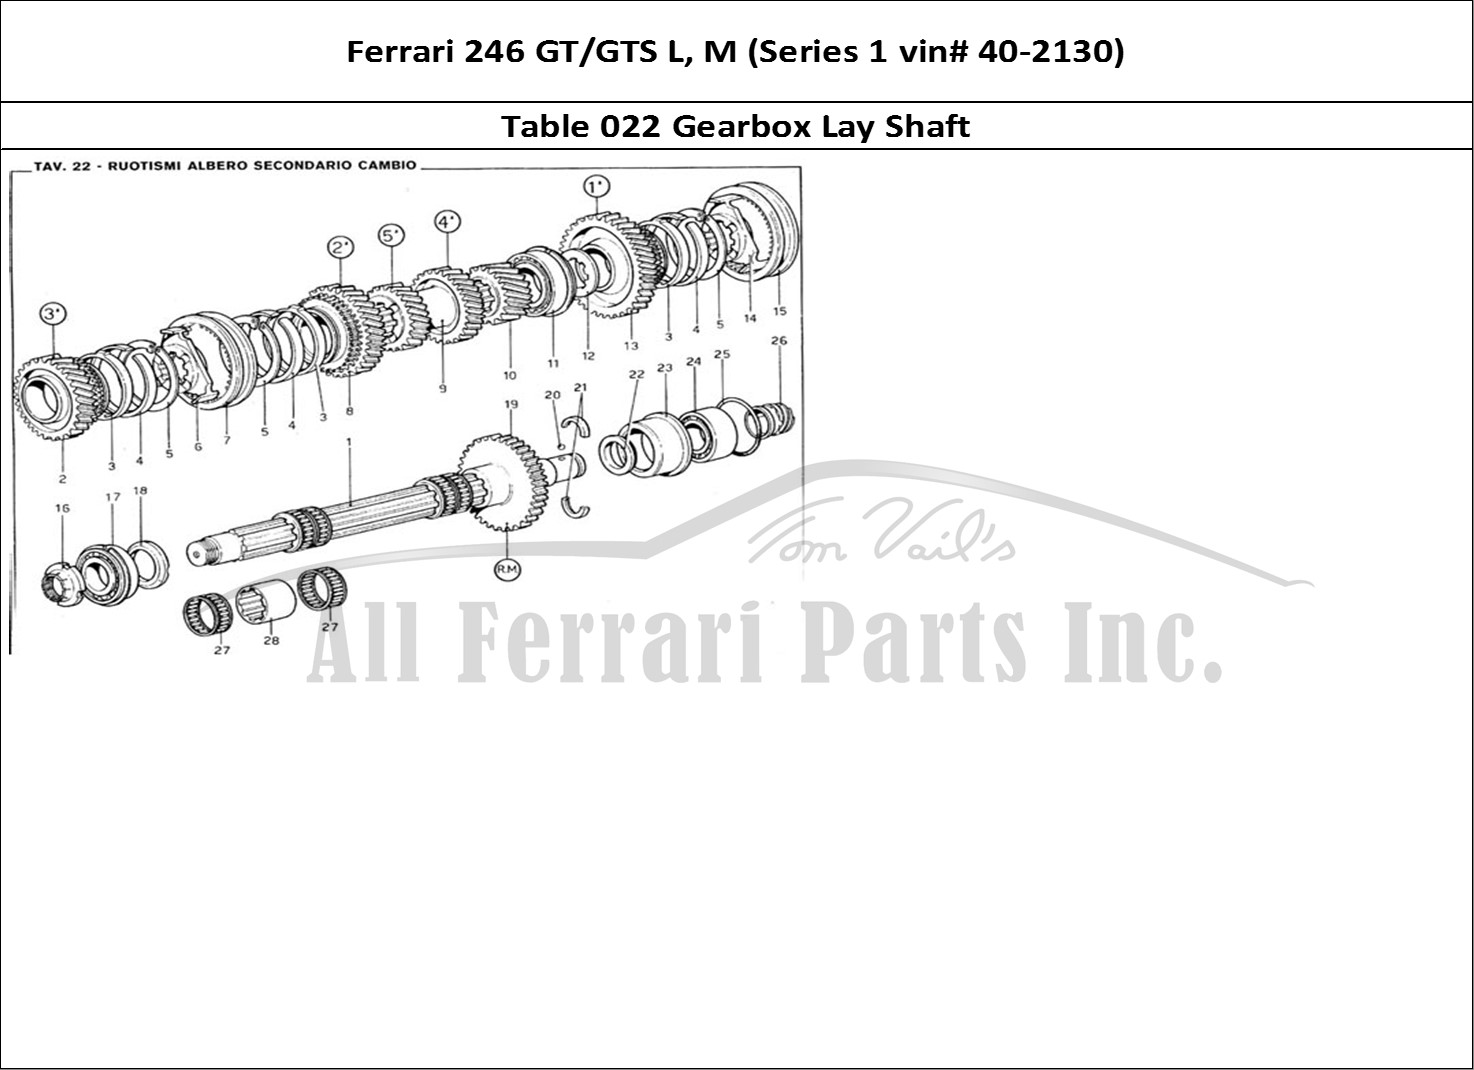 Ferrari Parts Ferrari 246 GT Series 1 Page 022 Lay Shaft Gearing